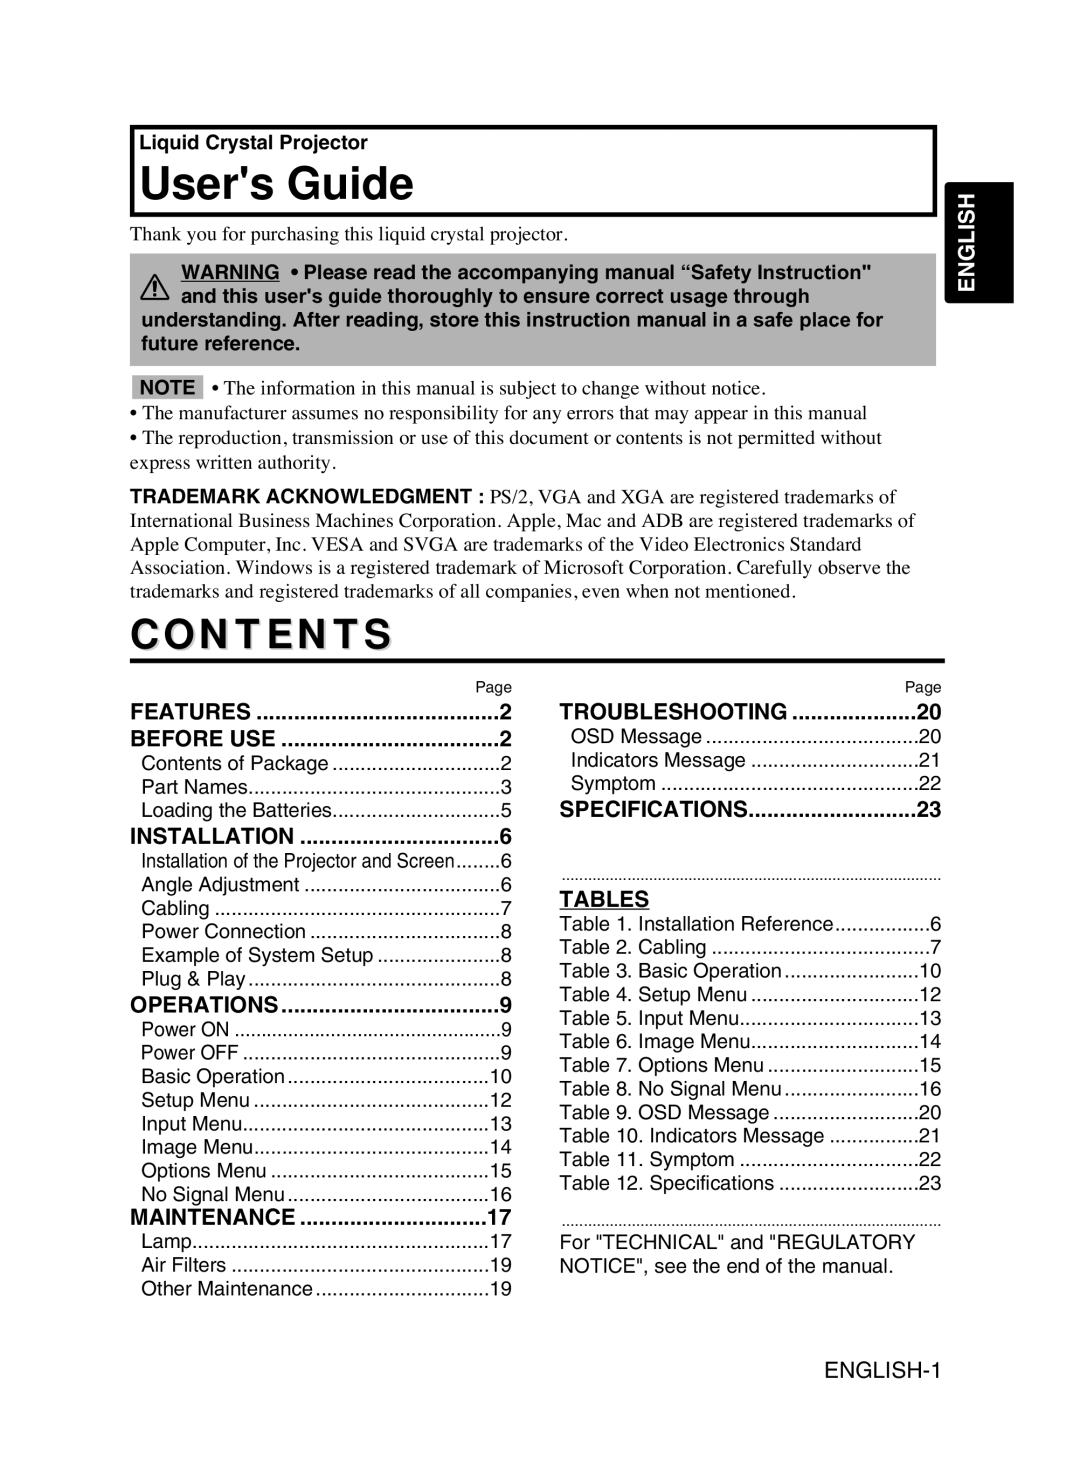 Proxima ASA DP6870 manual Contents, Tables, English, Users Guide 